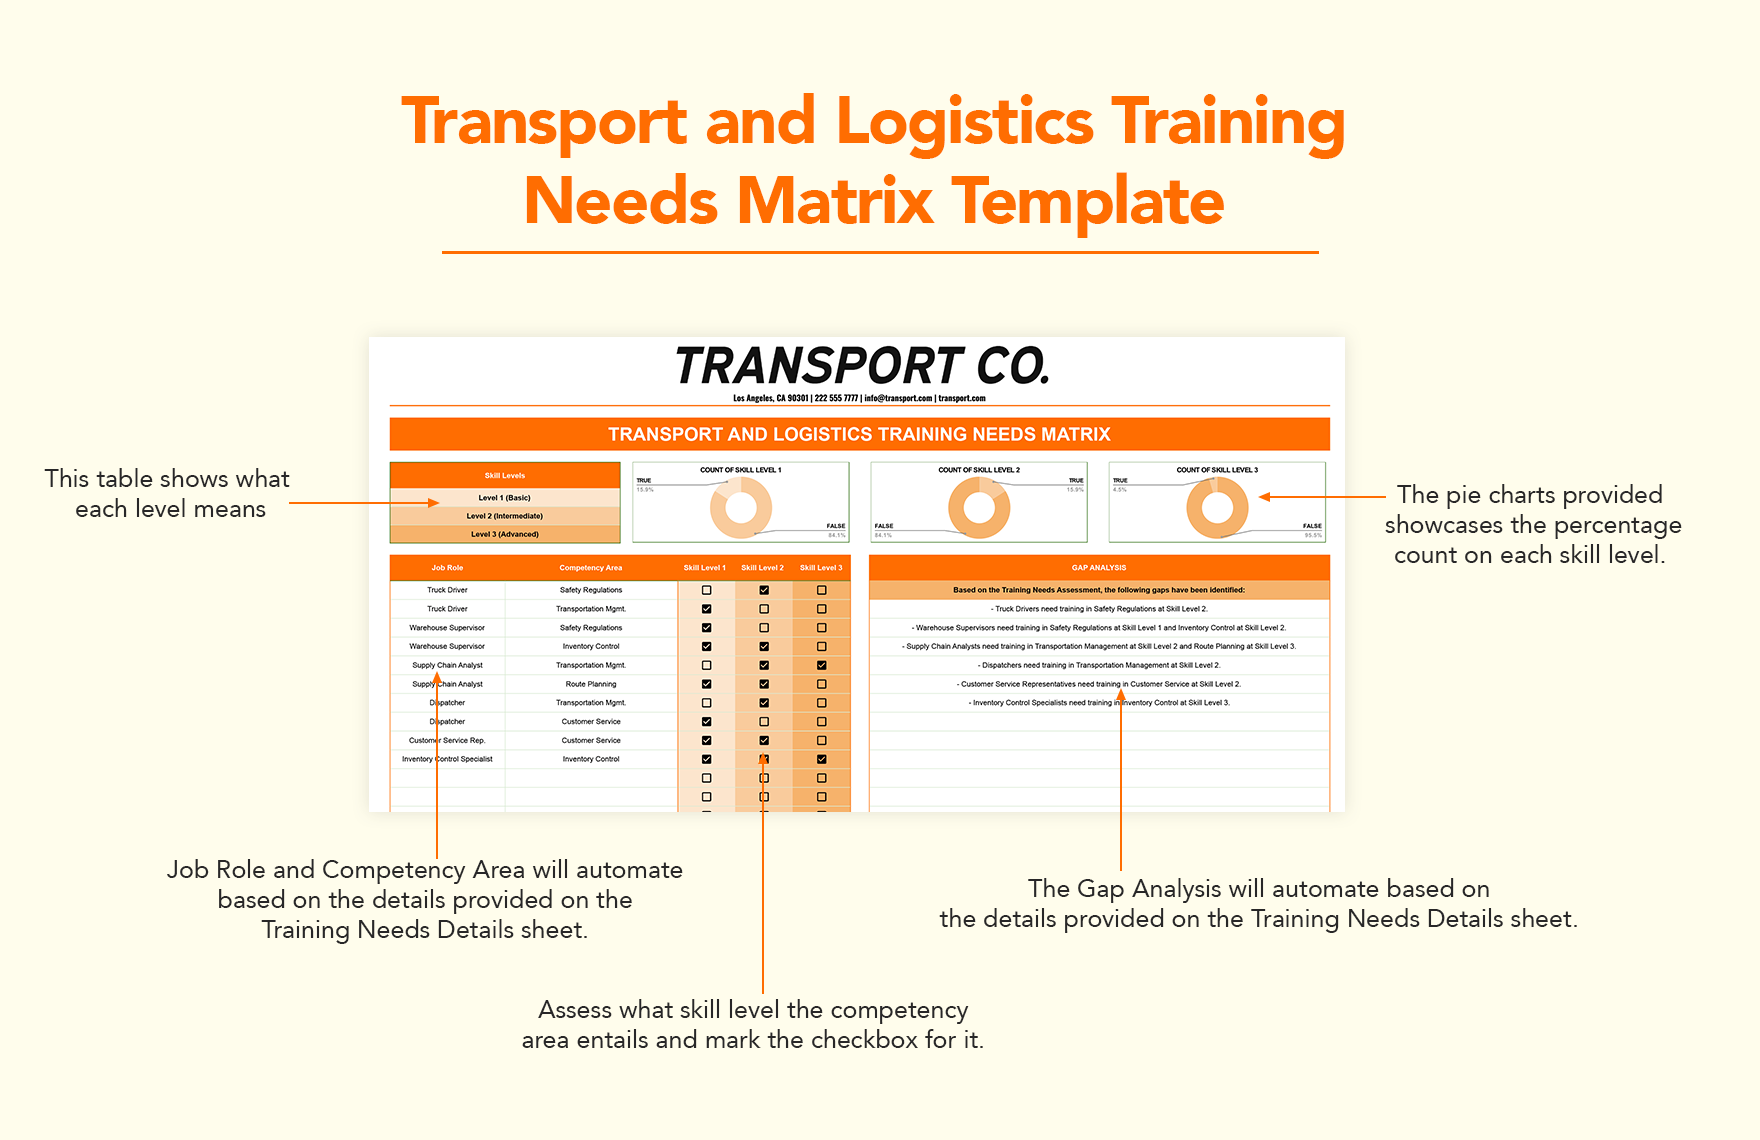 Transport and Logistics Training Needs Matrix Template